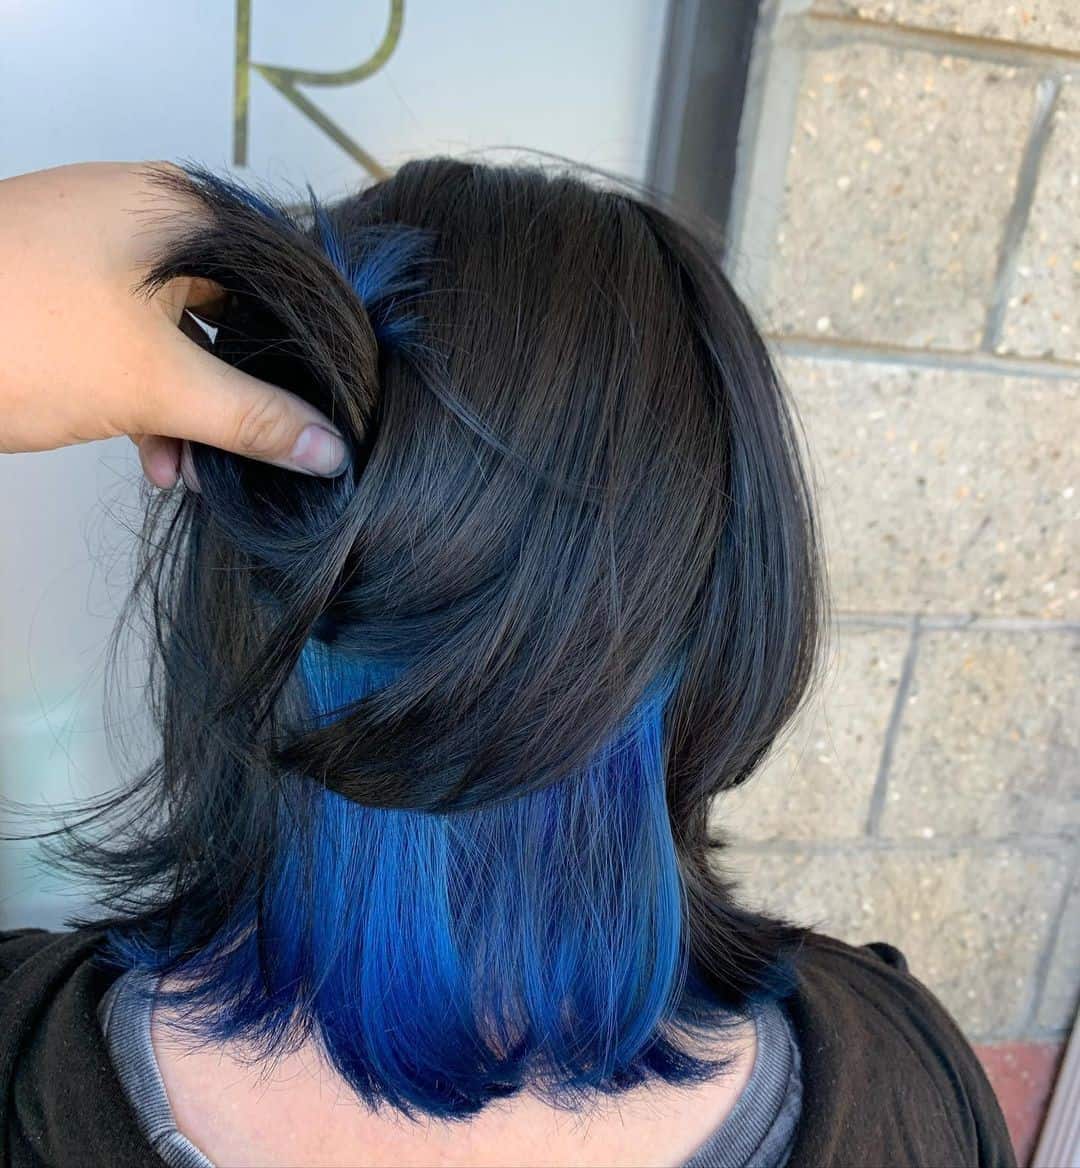 Dark Black And Blue Hair Short Look 